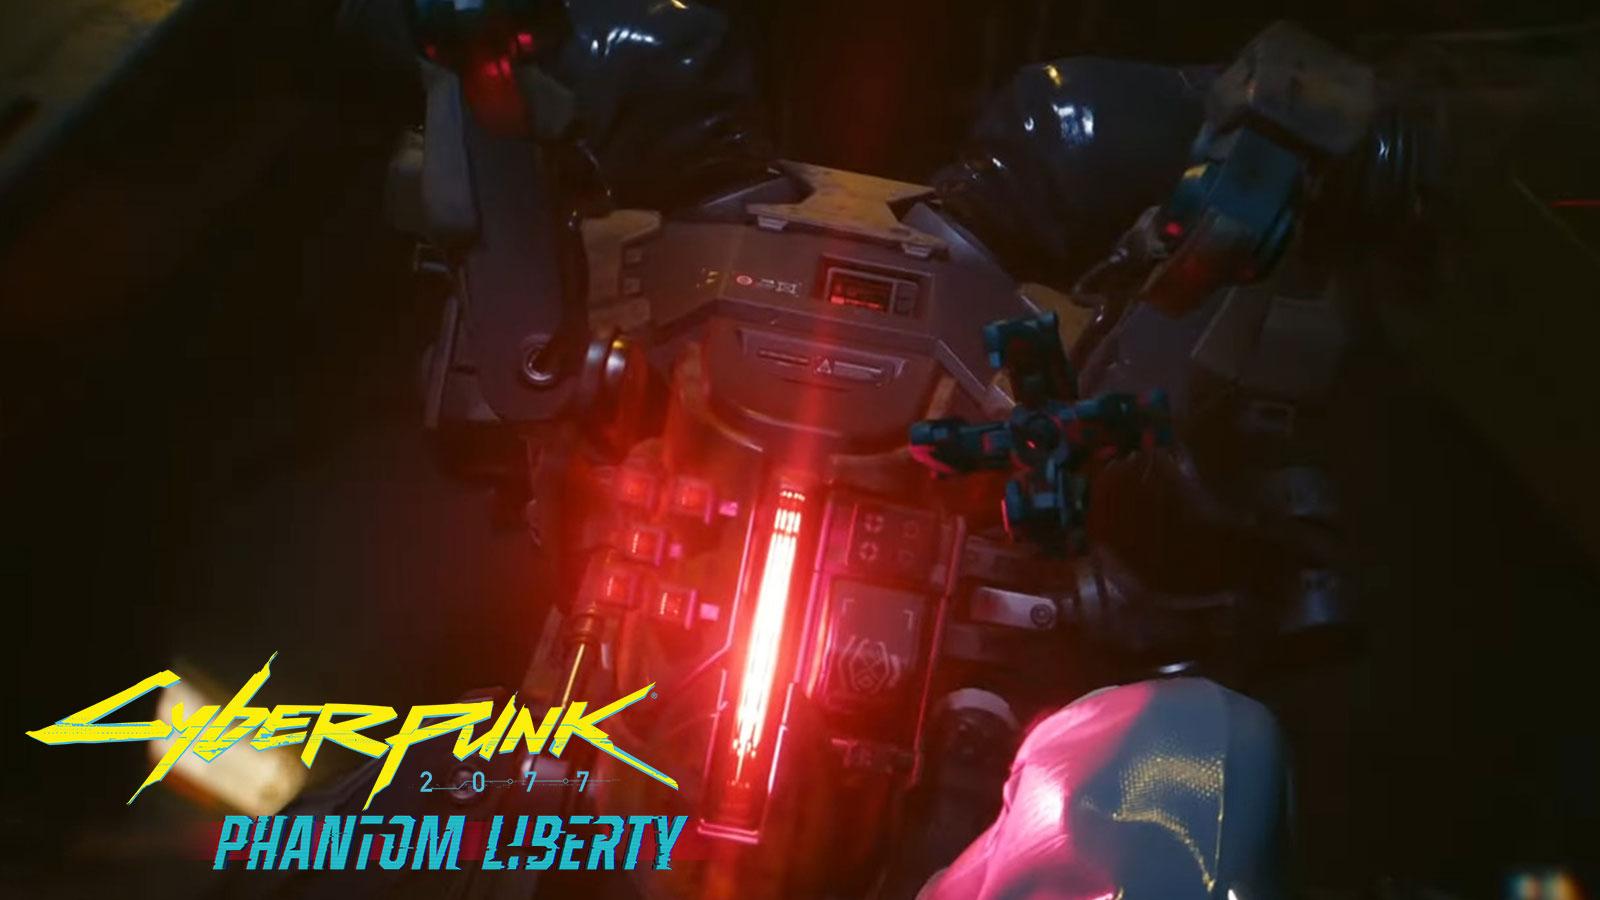 Cyberpunk 2077 Phantom Liberty 'Somewhat Damaged' robot